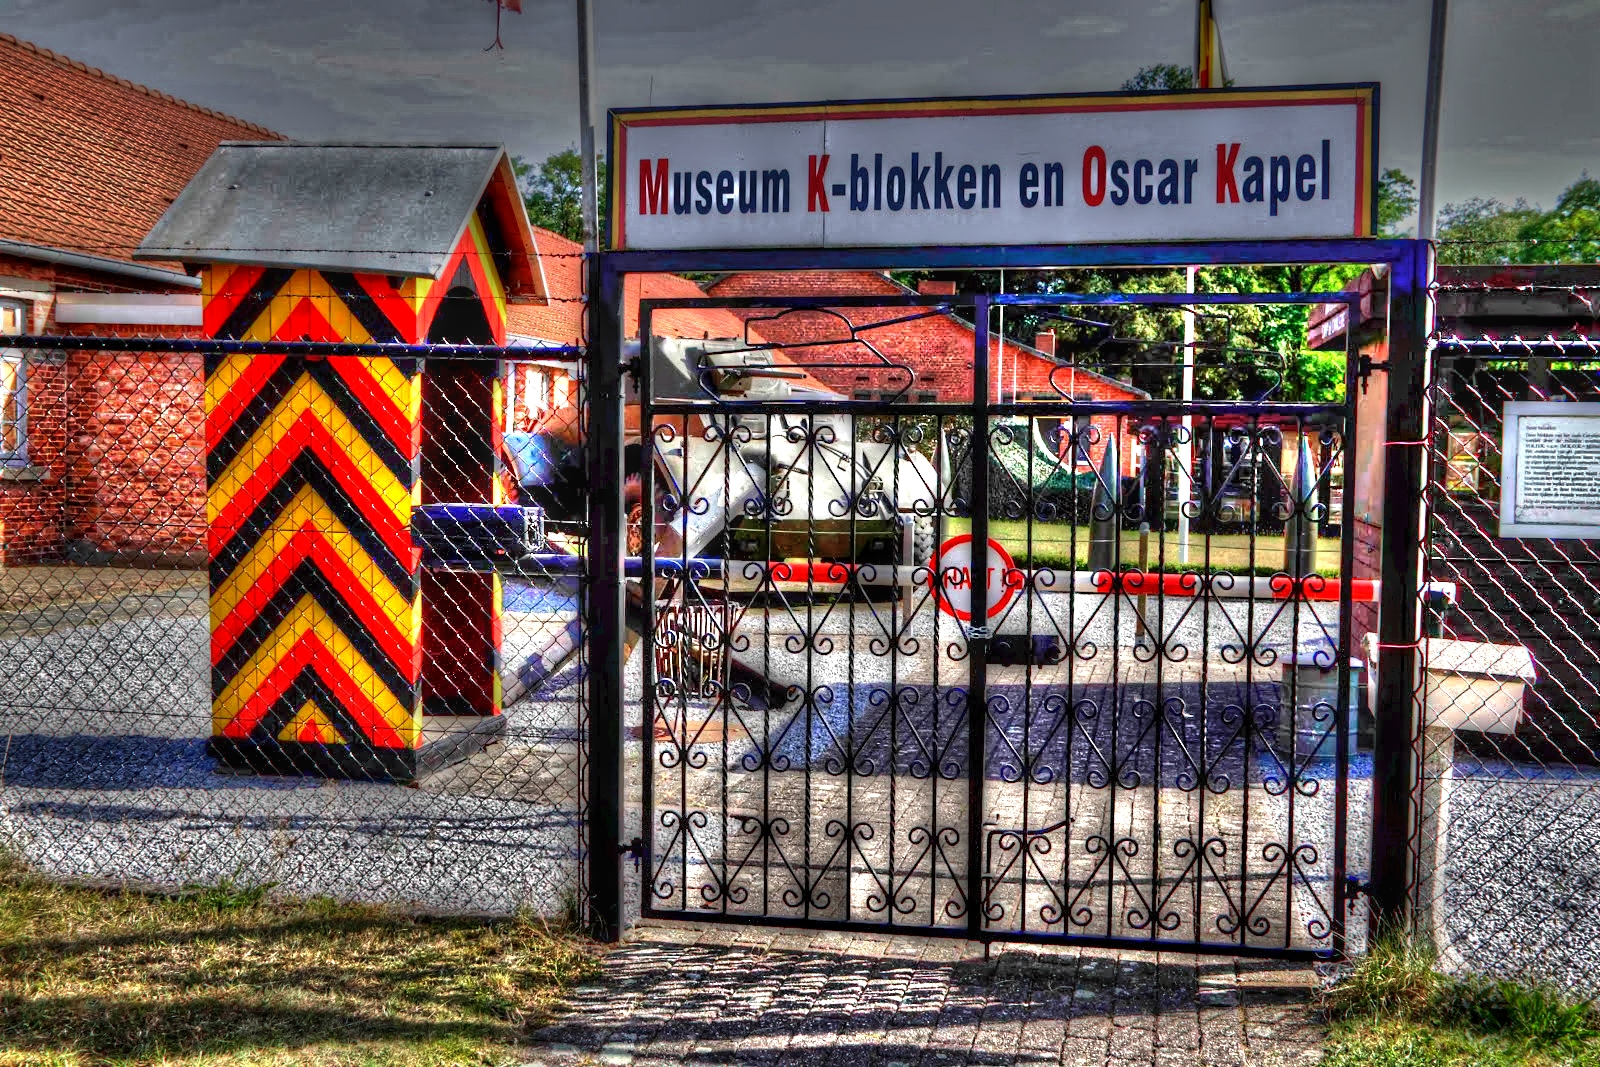 Museum K-Blocks & Oscarchapel (MKOK)